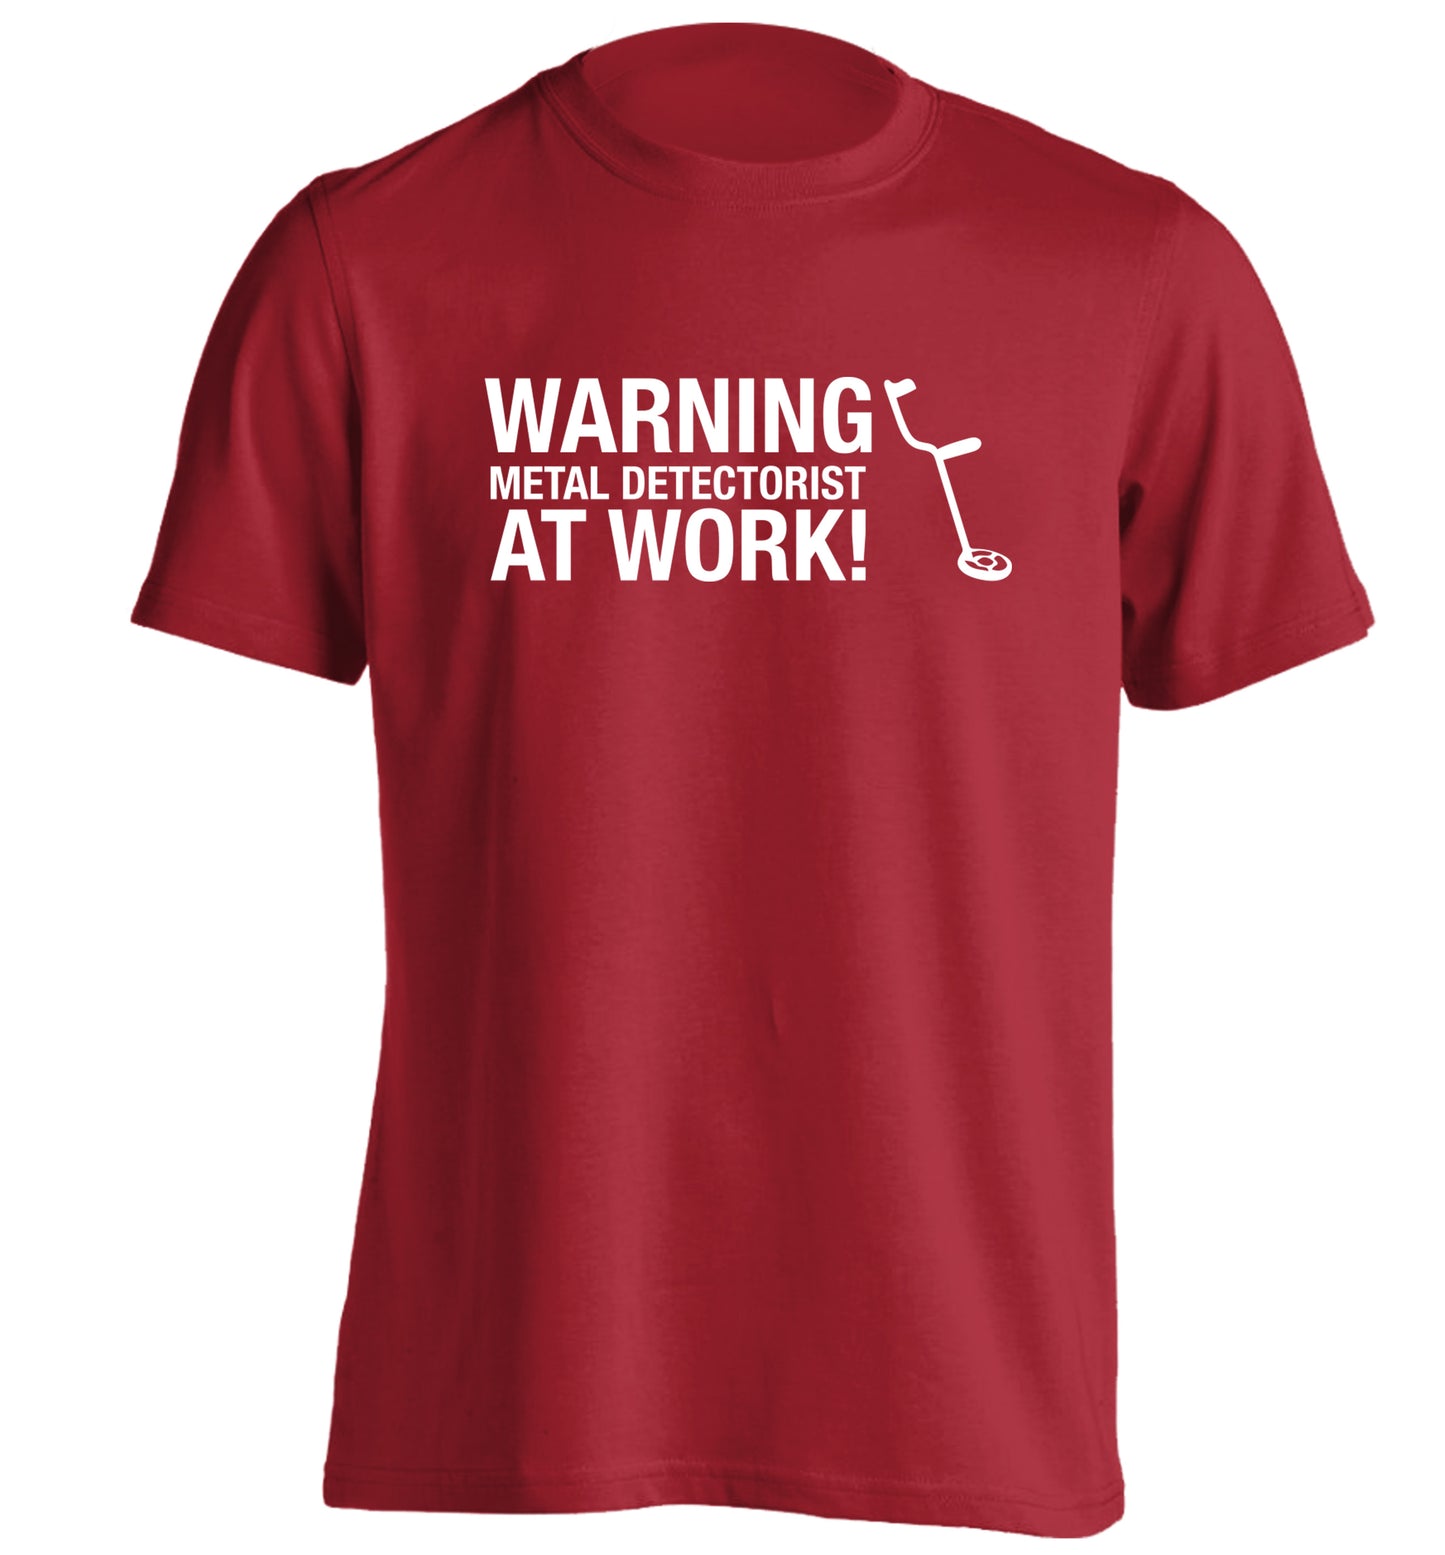 Warning metal detectorist at work! adults unisex red Tshirt 2XL